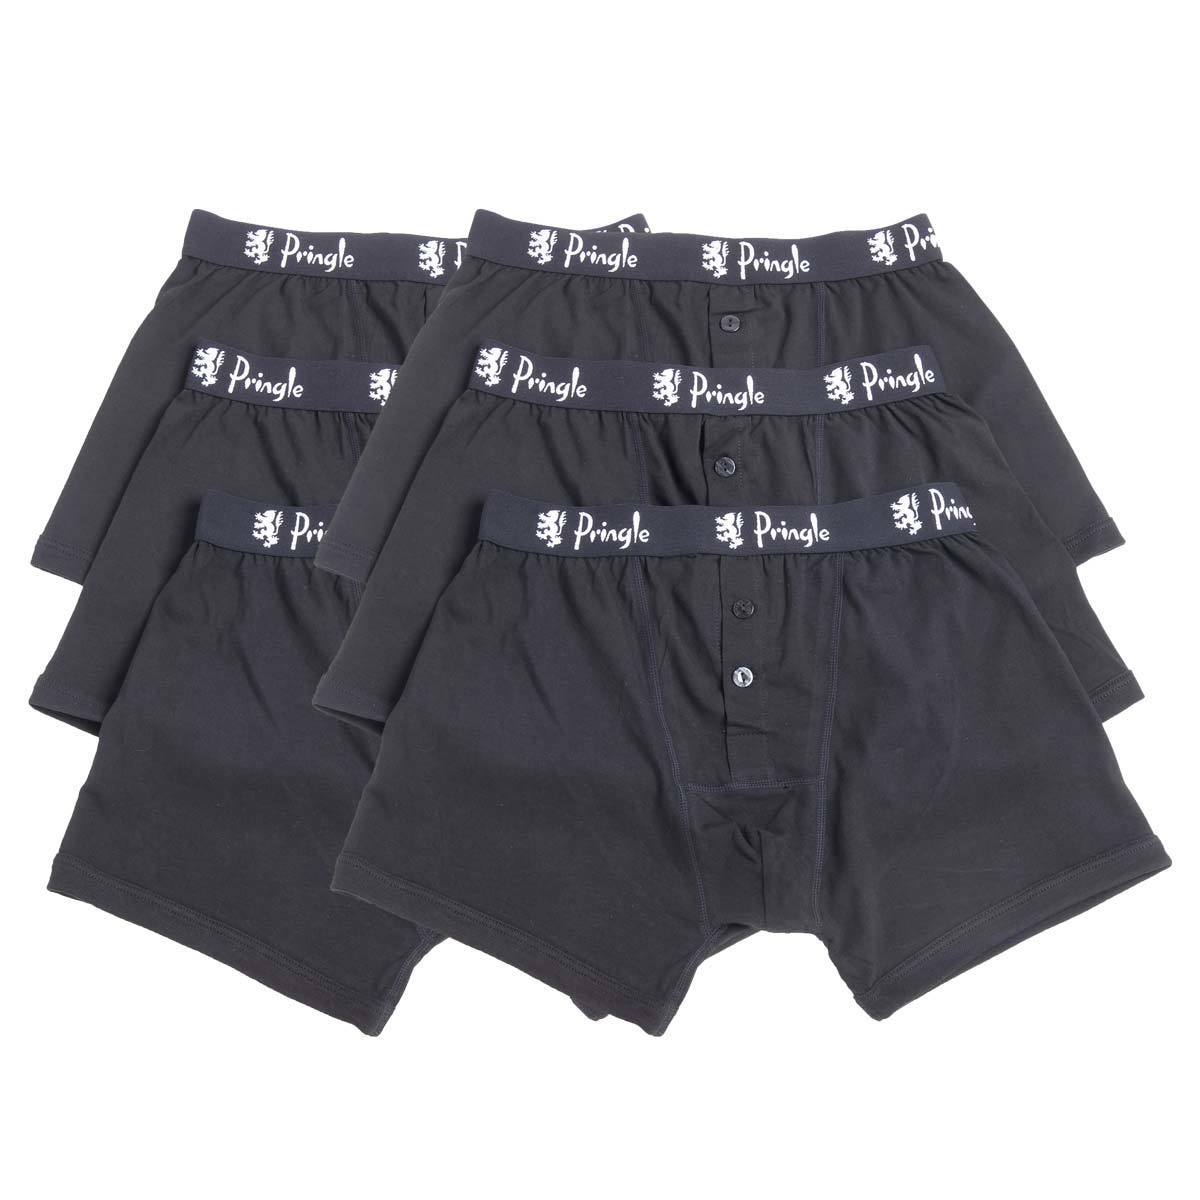 Pringle 2 x 3 - Pack William Men's Button Boxer Shorts in Black, Small